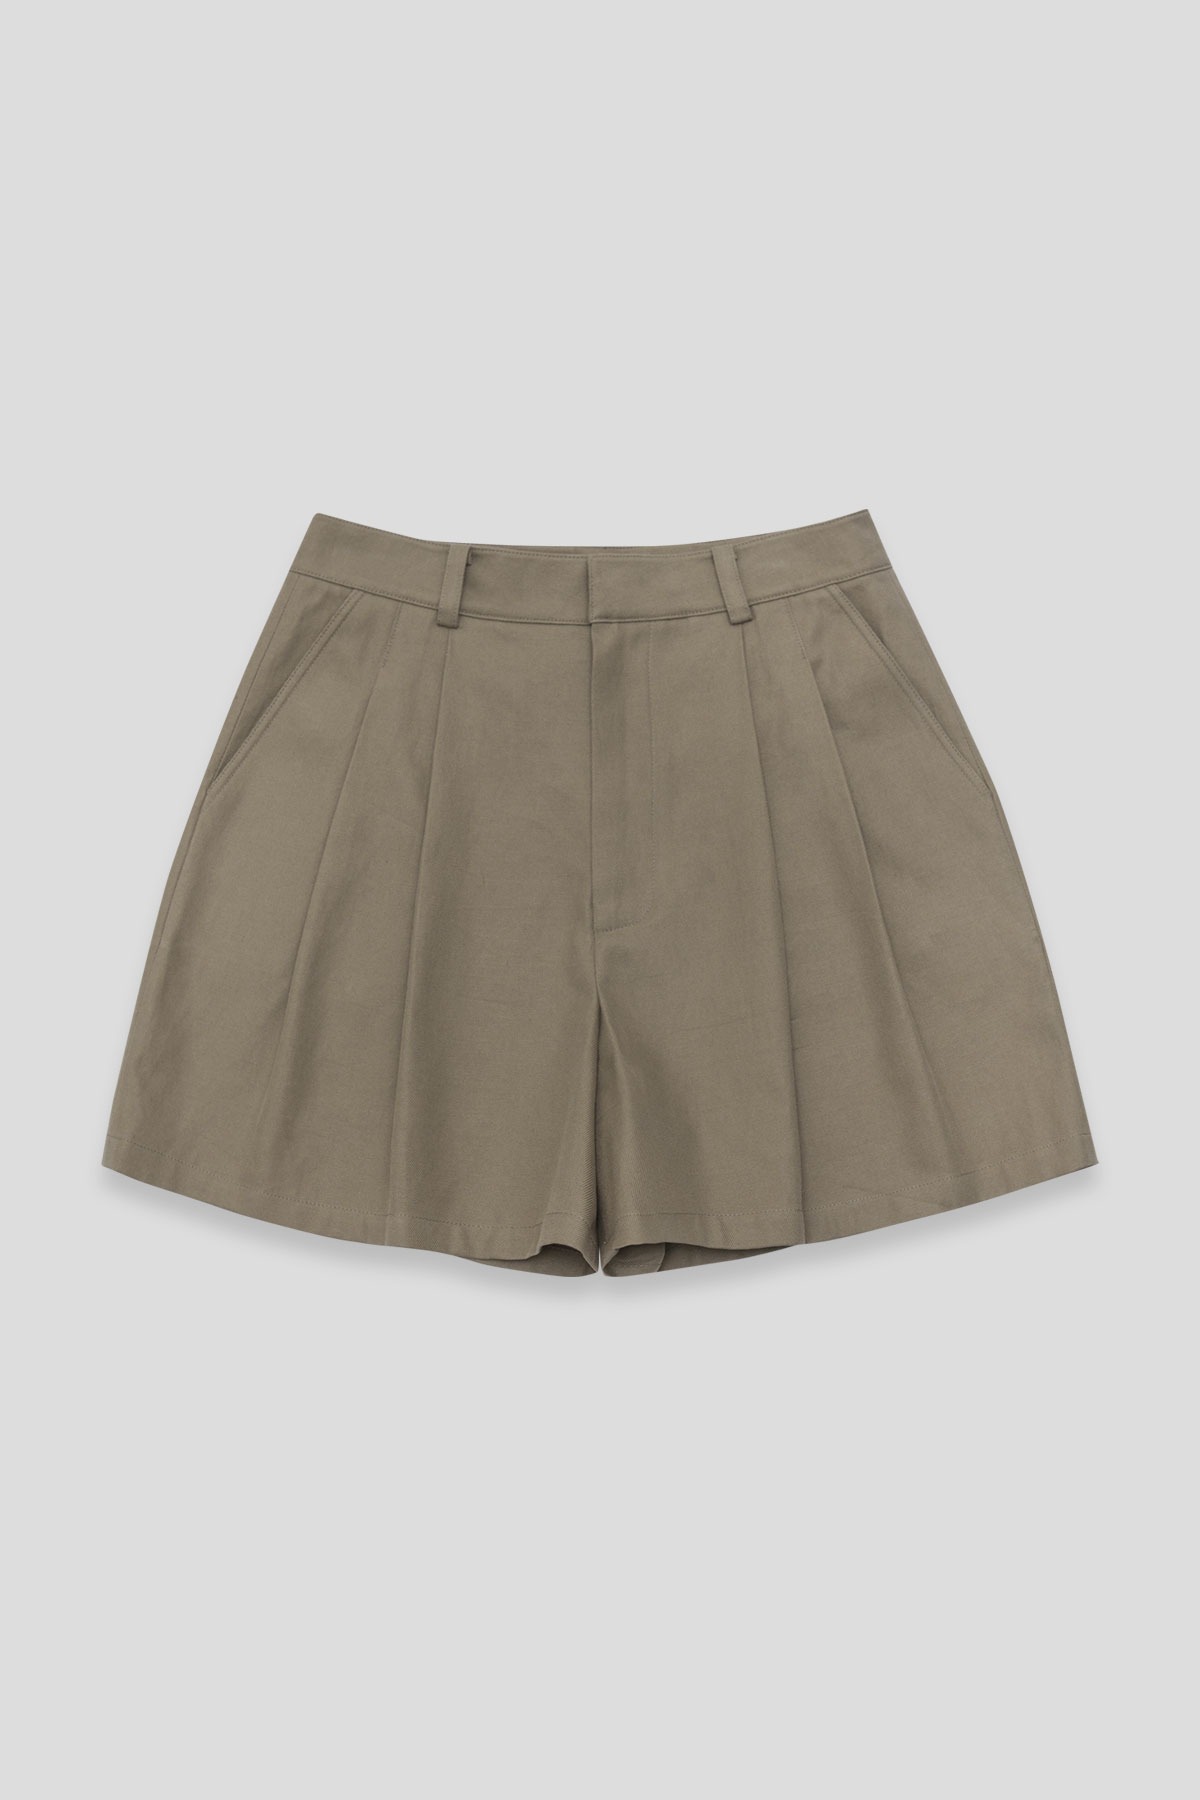 Linen cotton half pants(khaki)